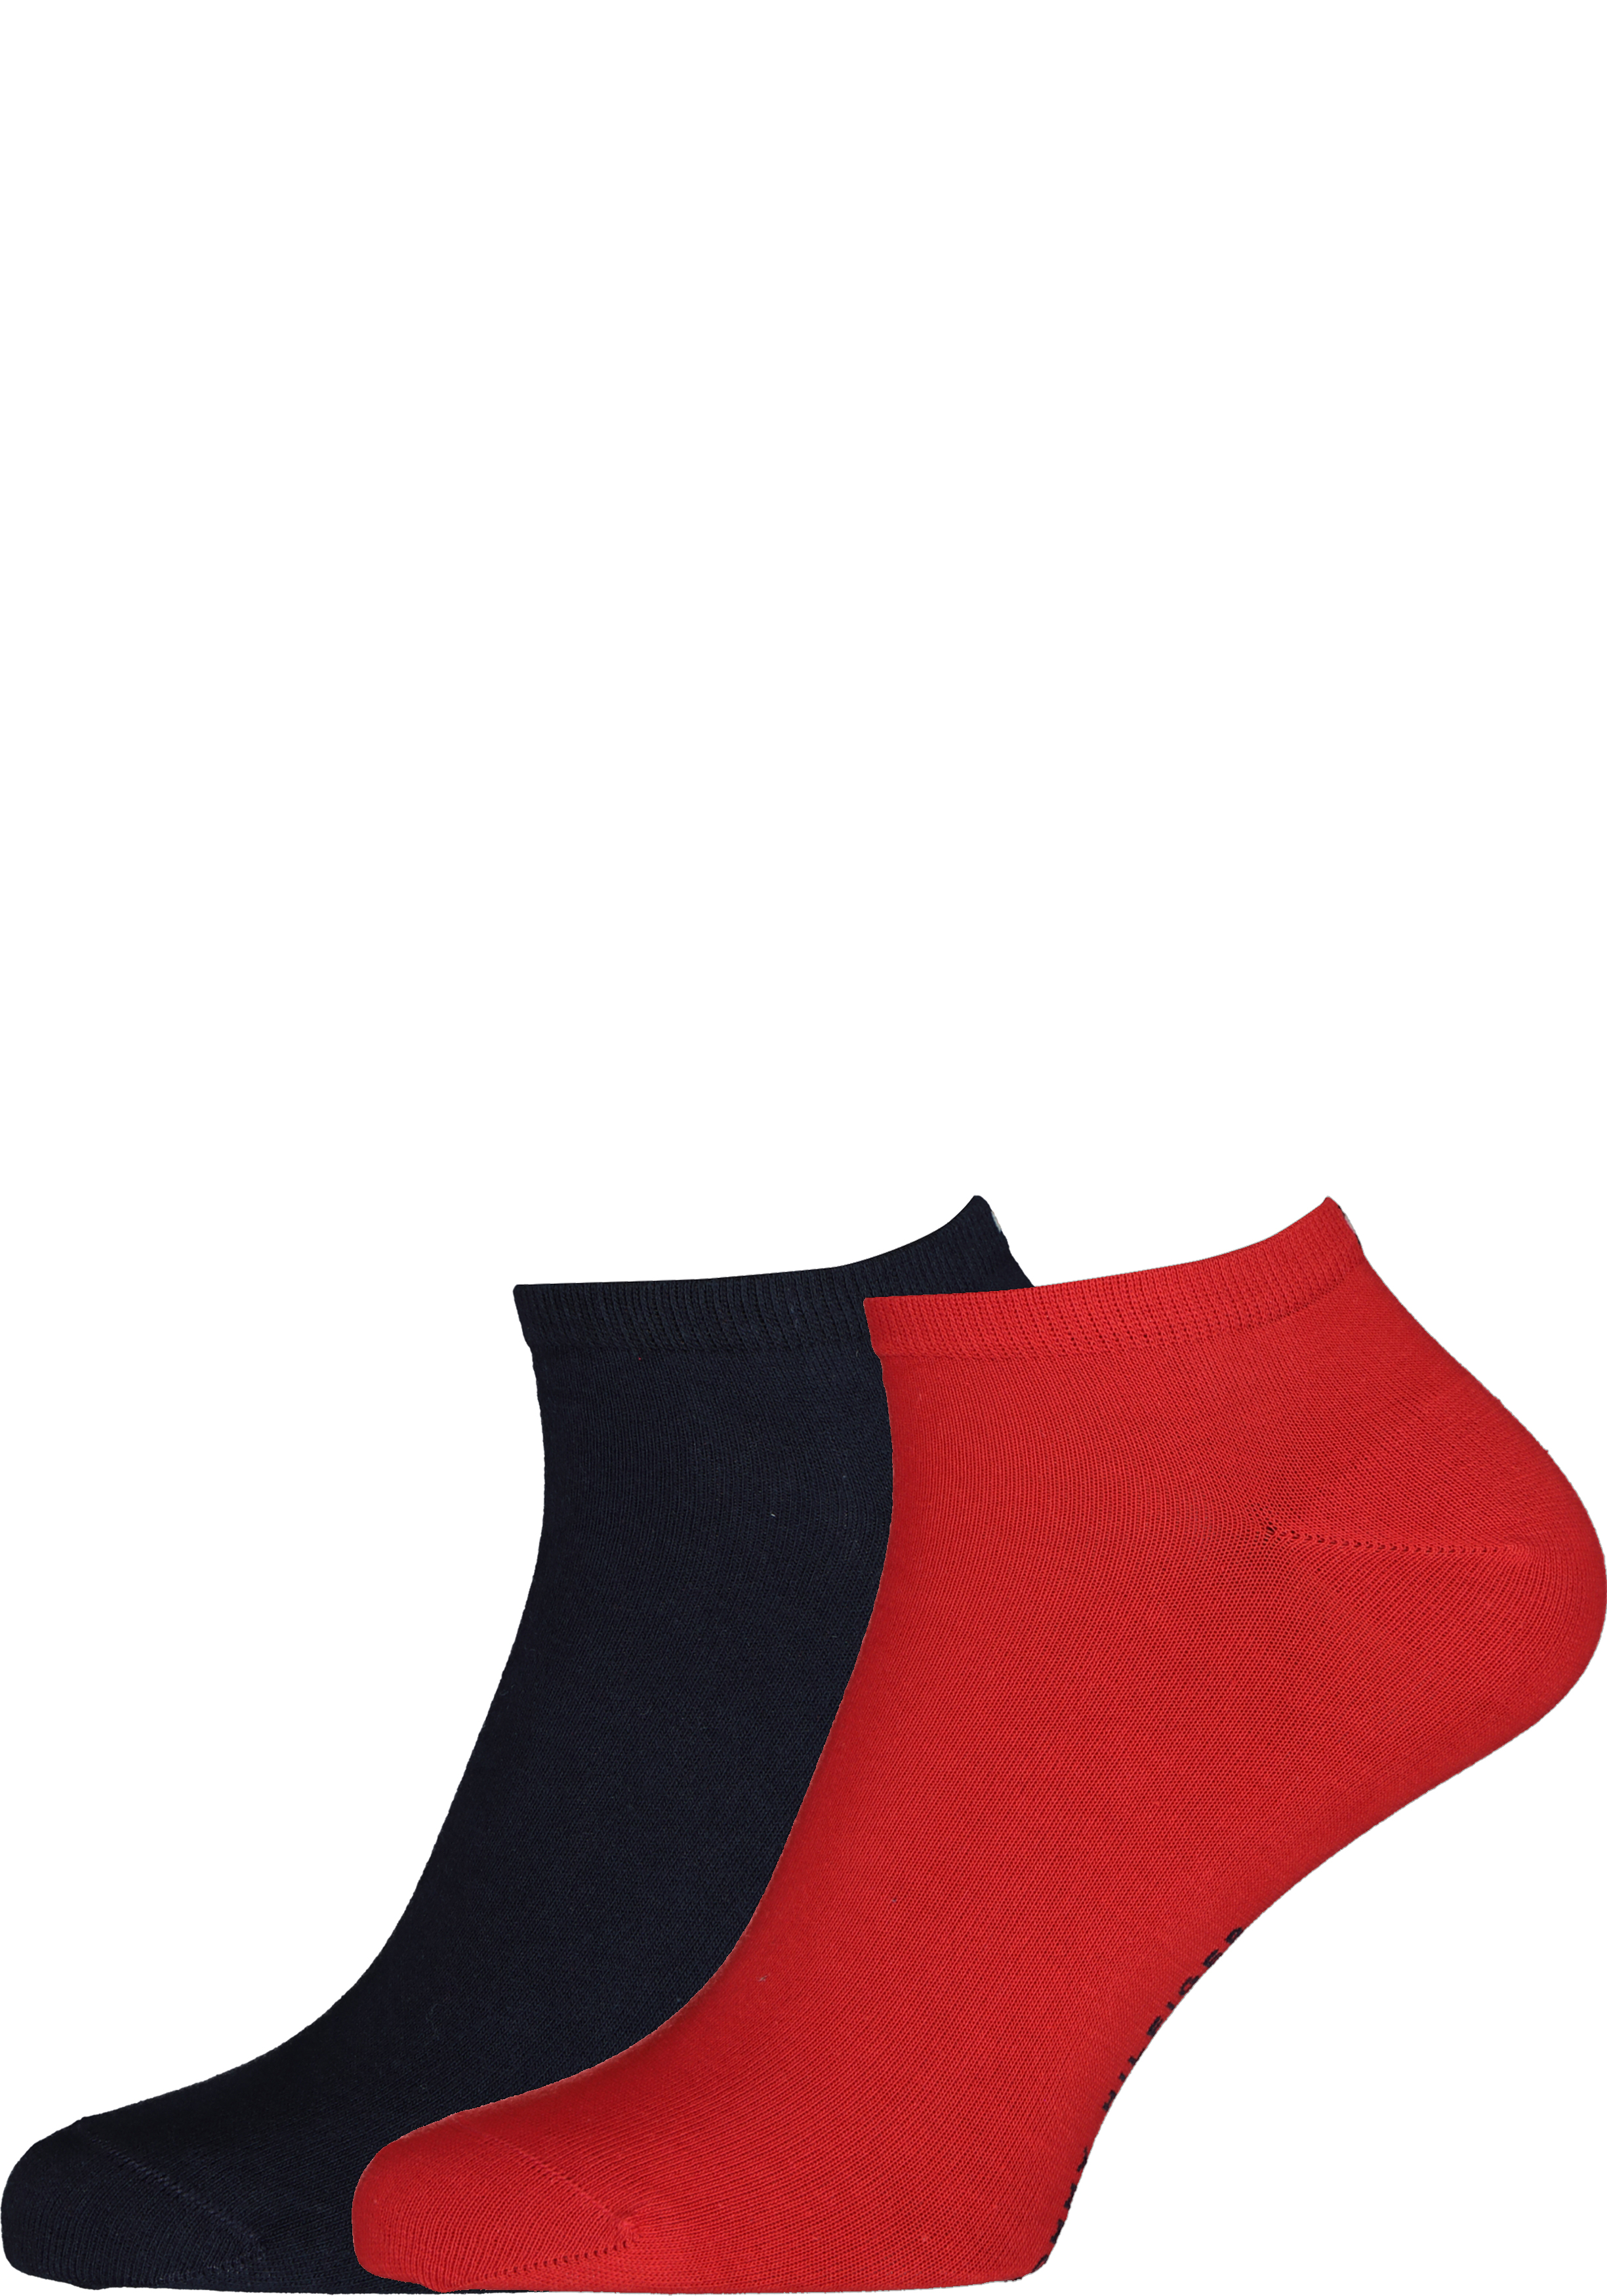 Tommy Hilfiger damessokken Sneaker (2-pack), korte enkelsok katoen, Tommy rood en blauw